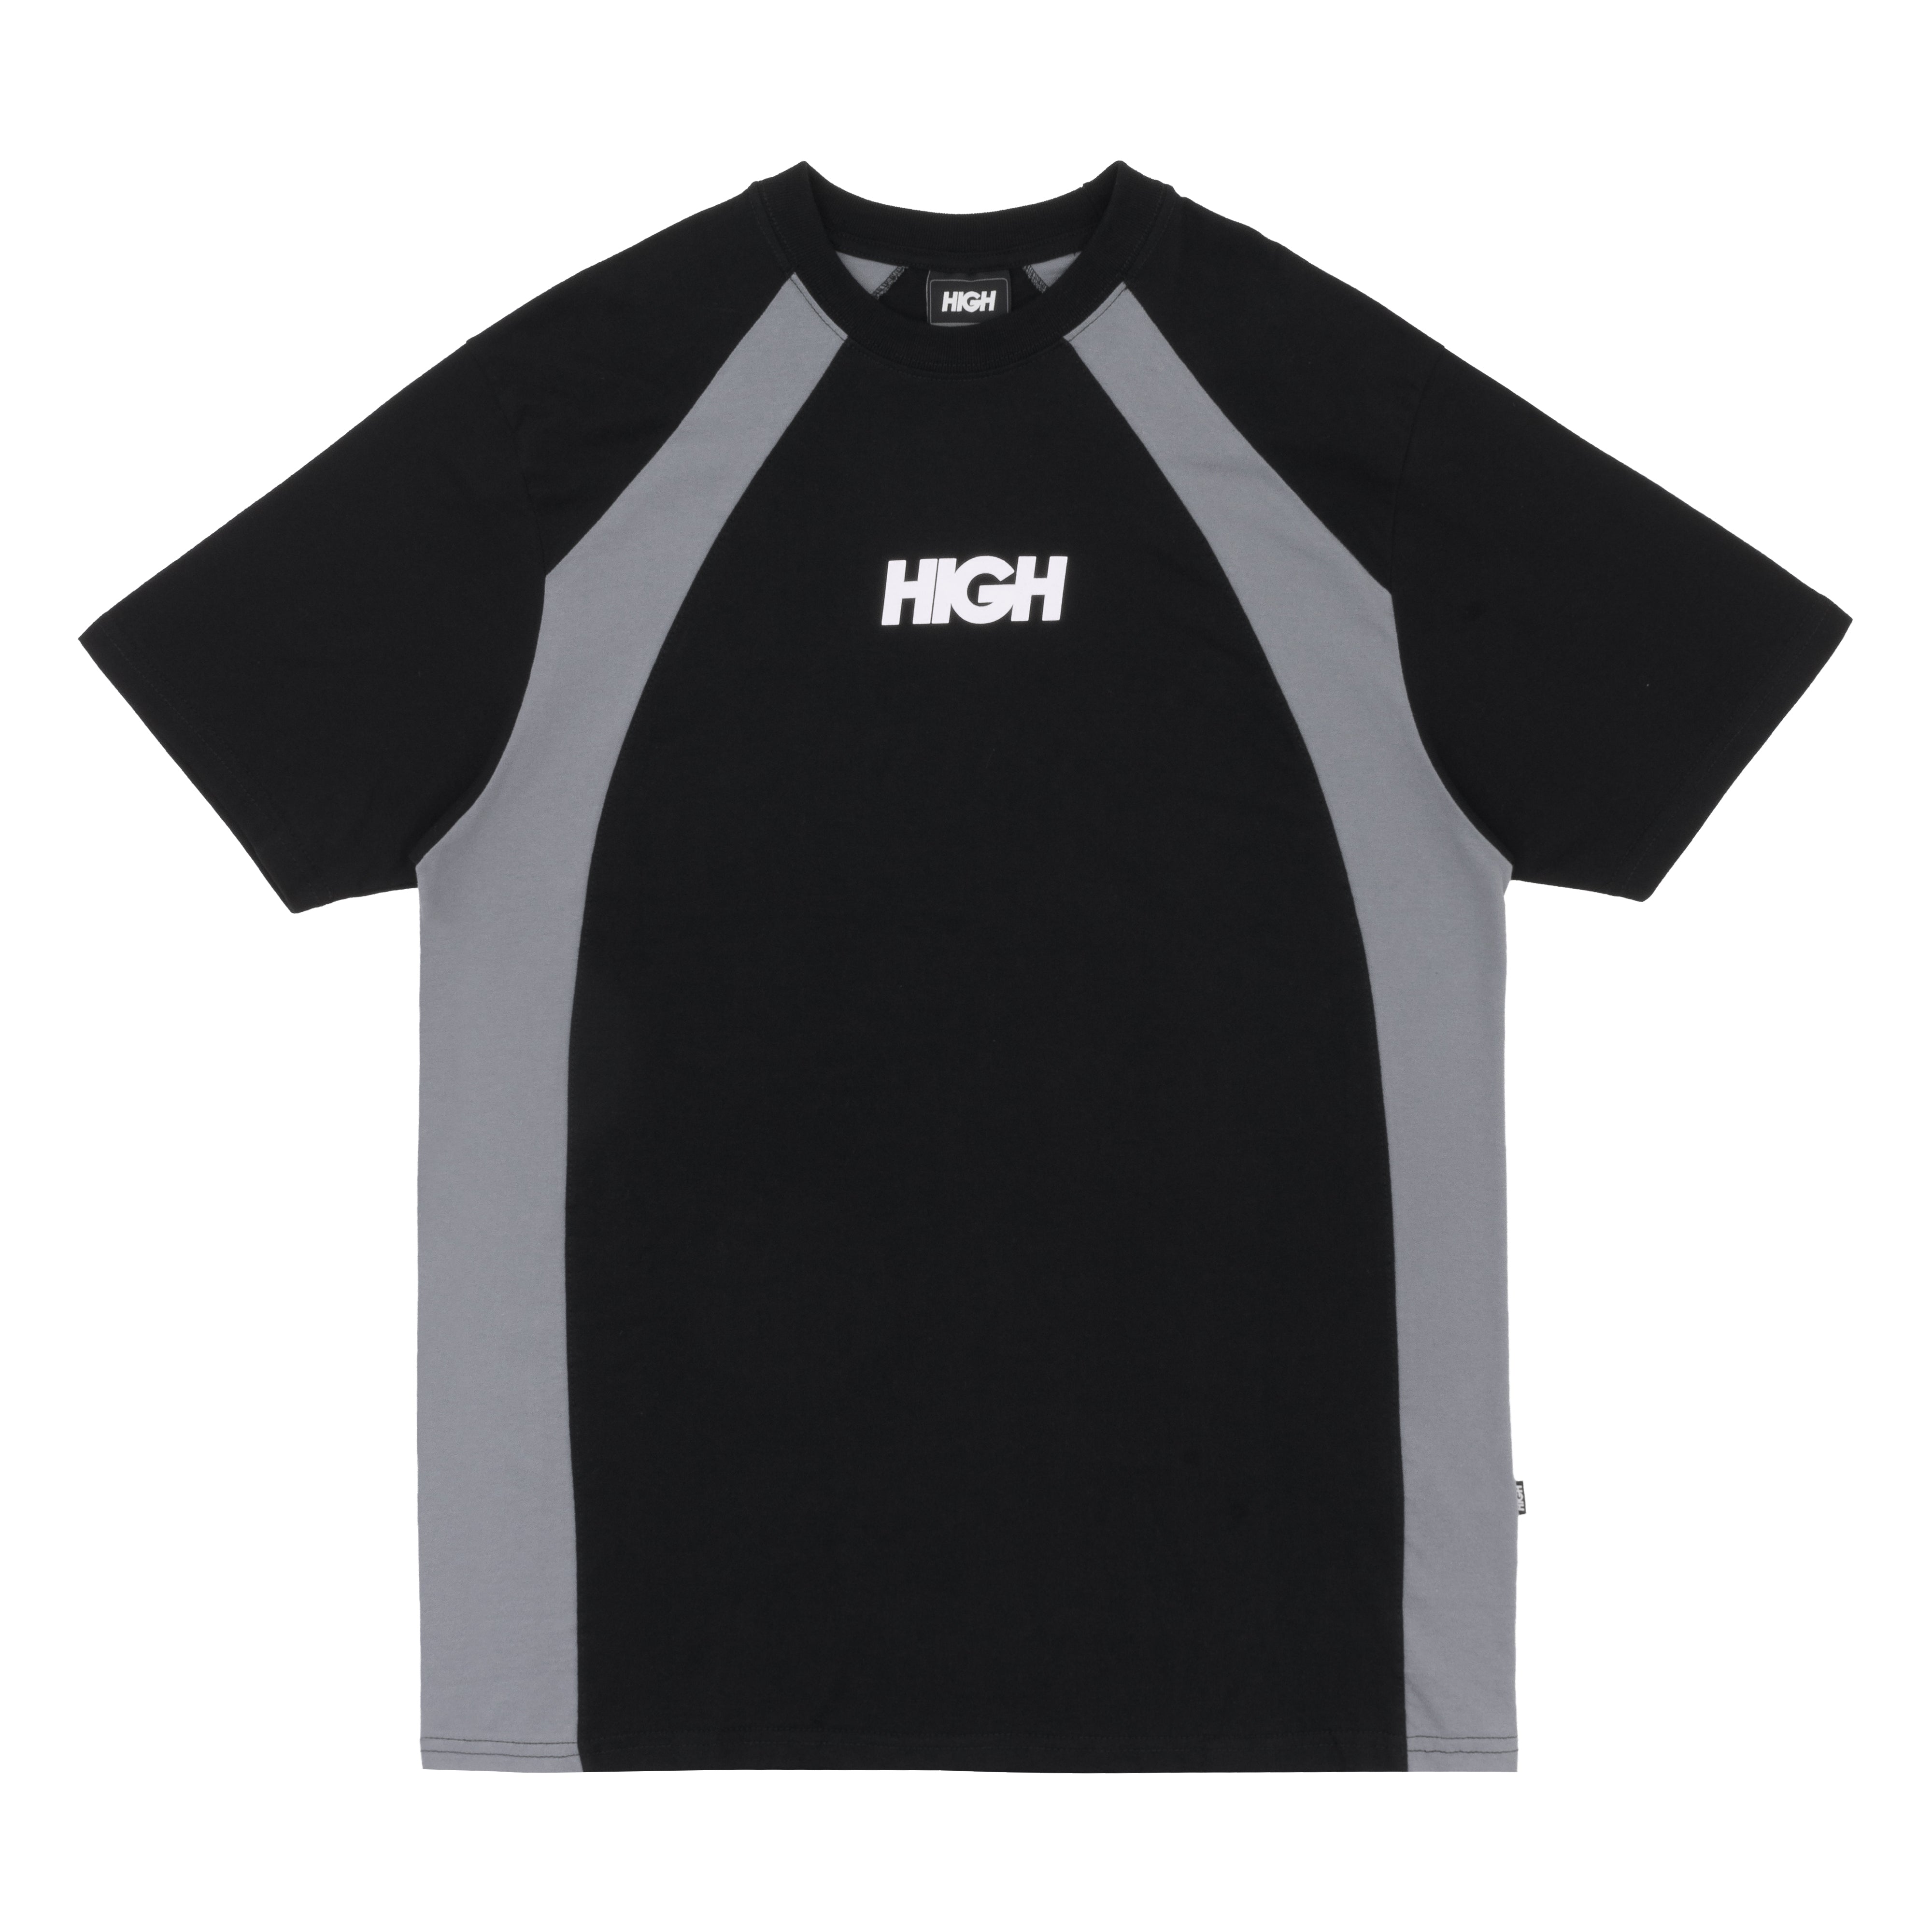 HIGH - Camiseta Raglan Lit Black